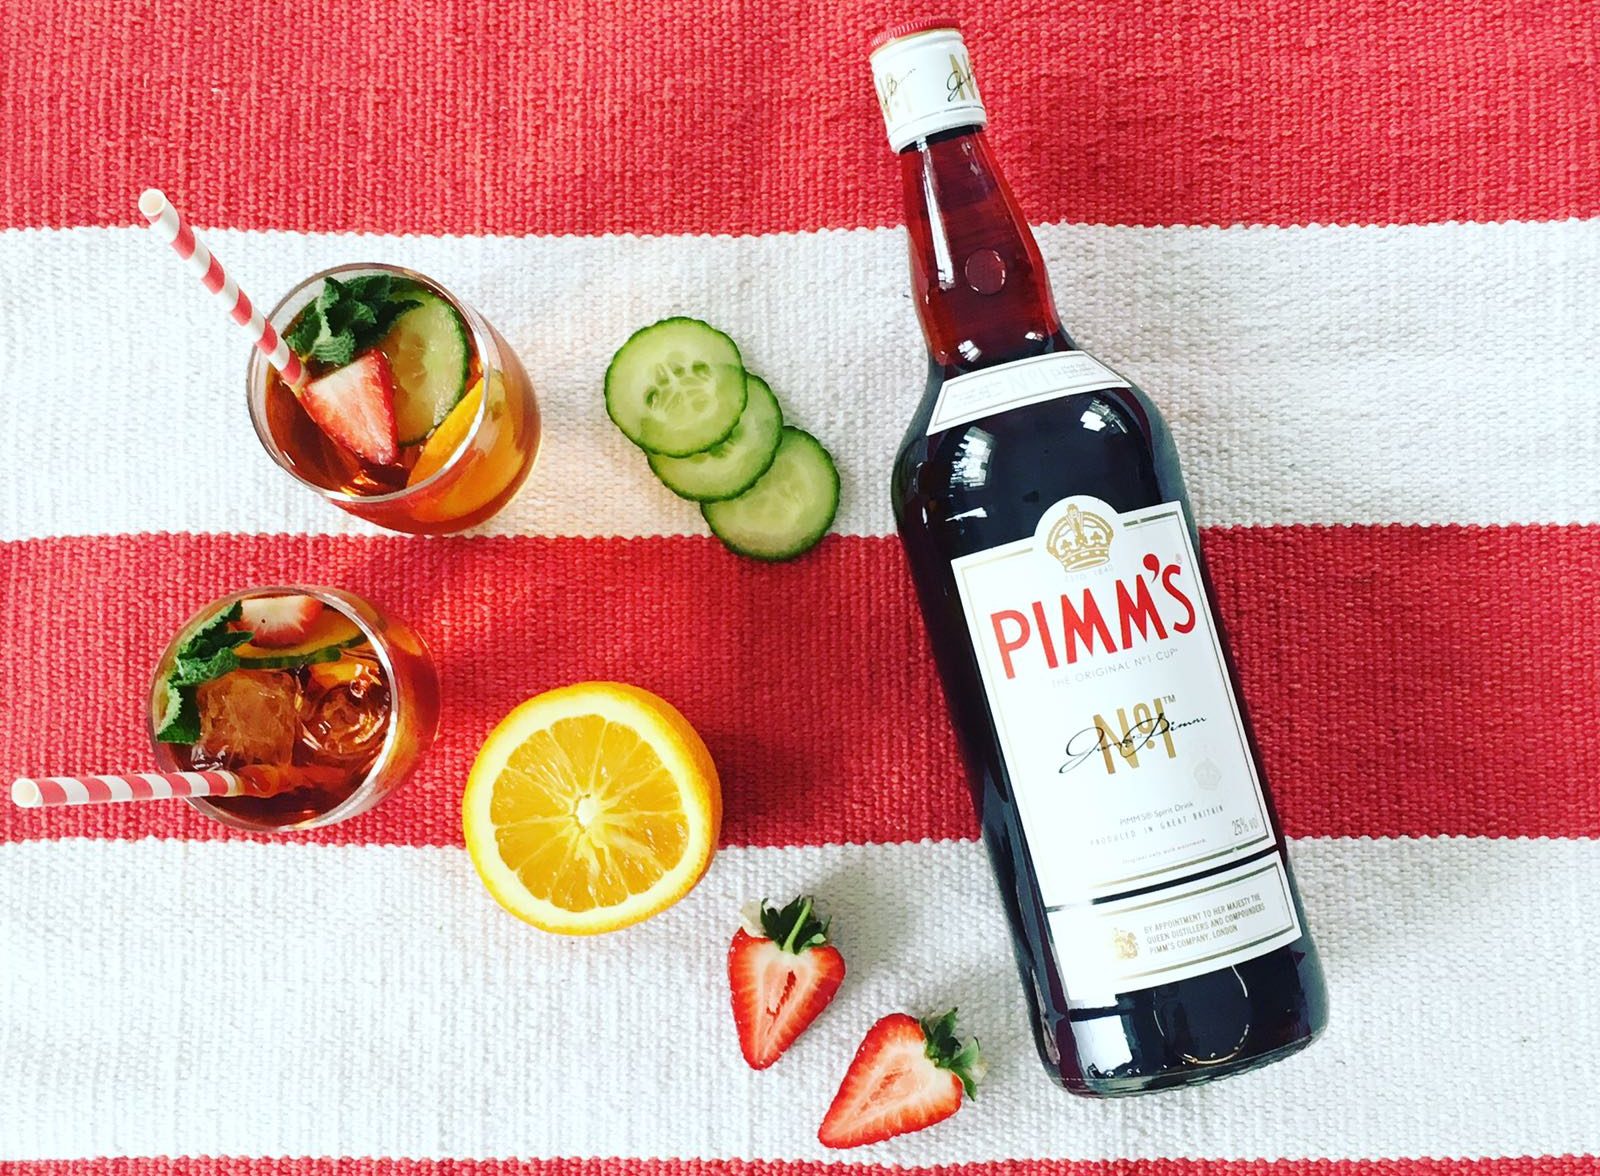 Pimm's no1, cocktail, lappoms, lifestyle blog, drink